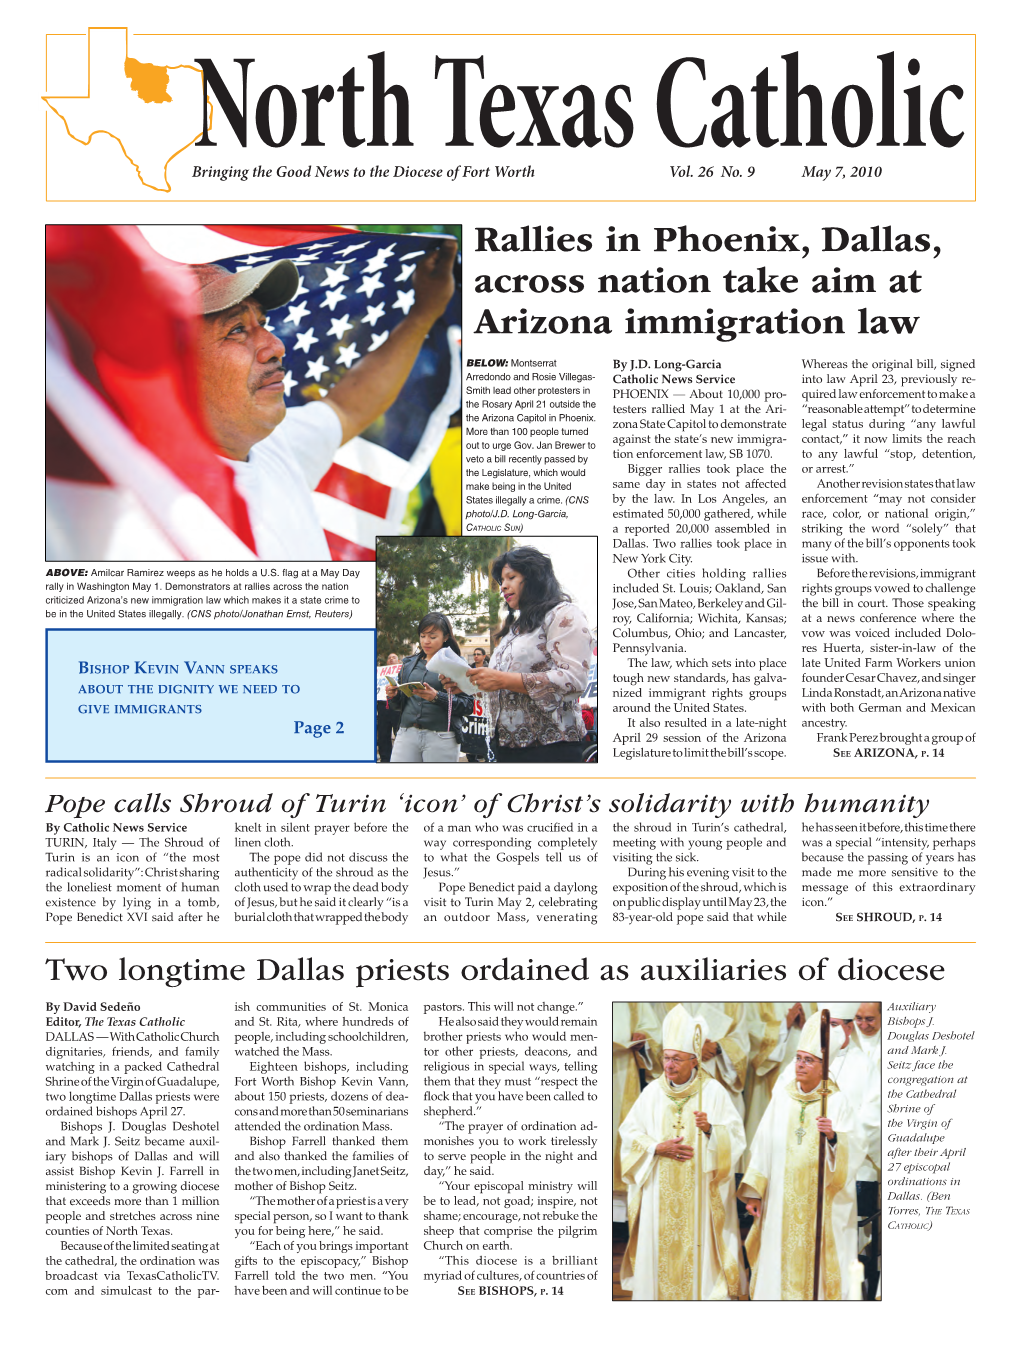 Rallies in Phoenix, Dallas, Across Nation Take Aim at Arizona Immigration Law